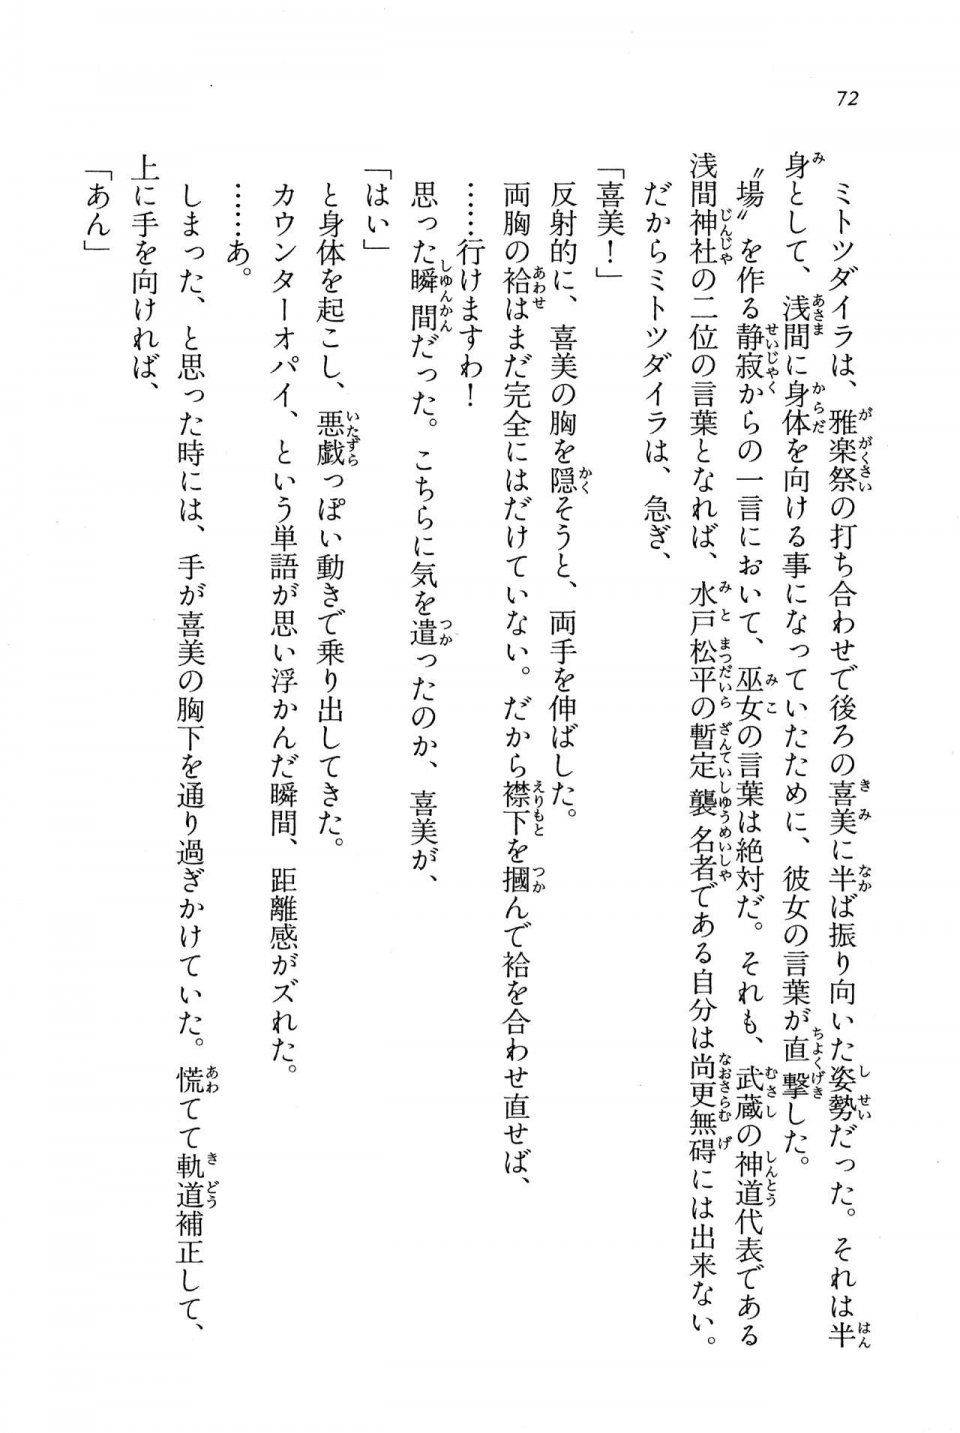 Kyoukai Senjou no Horizon BD Special Mininovel Vol 5(3A) - Photo #76